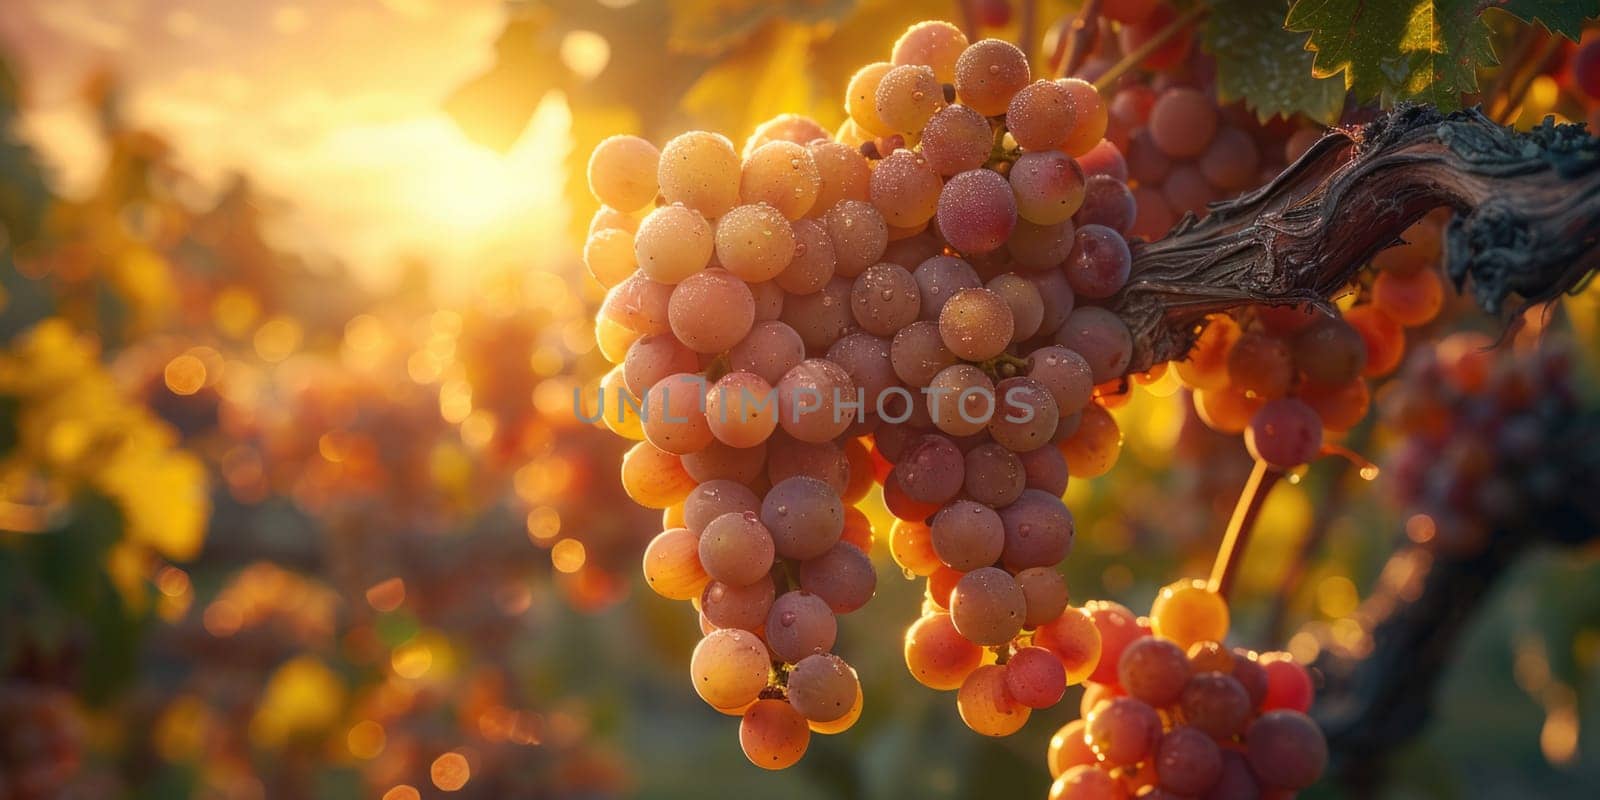 Multiple ripe grapes clustered together on a vine, ready for harvest.